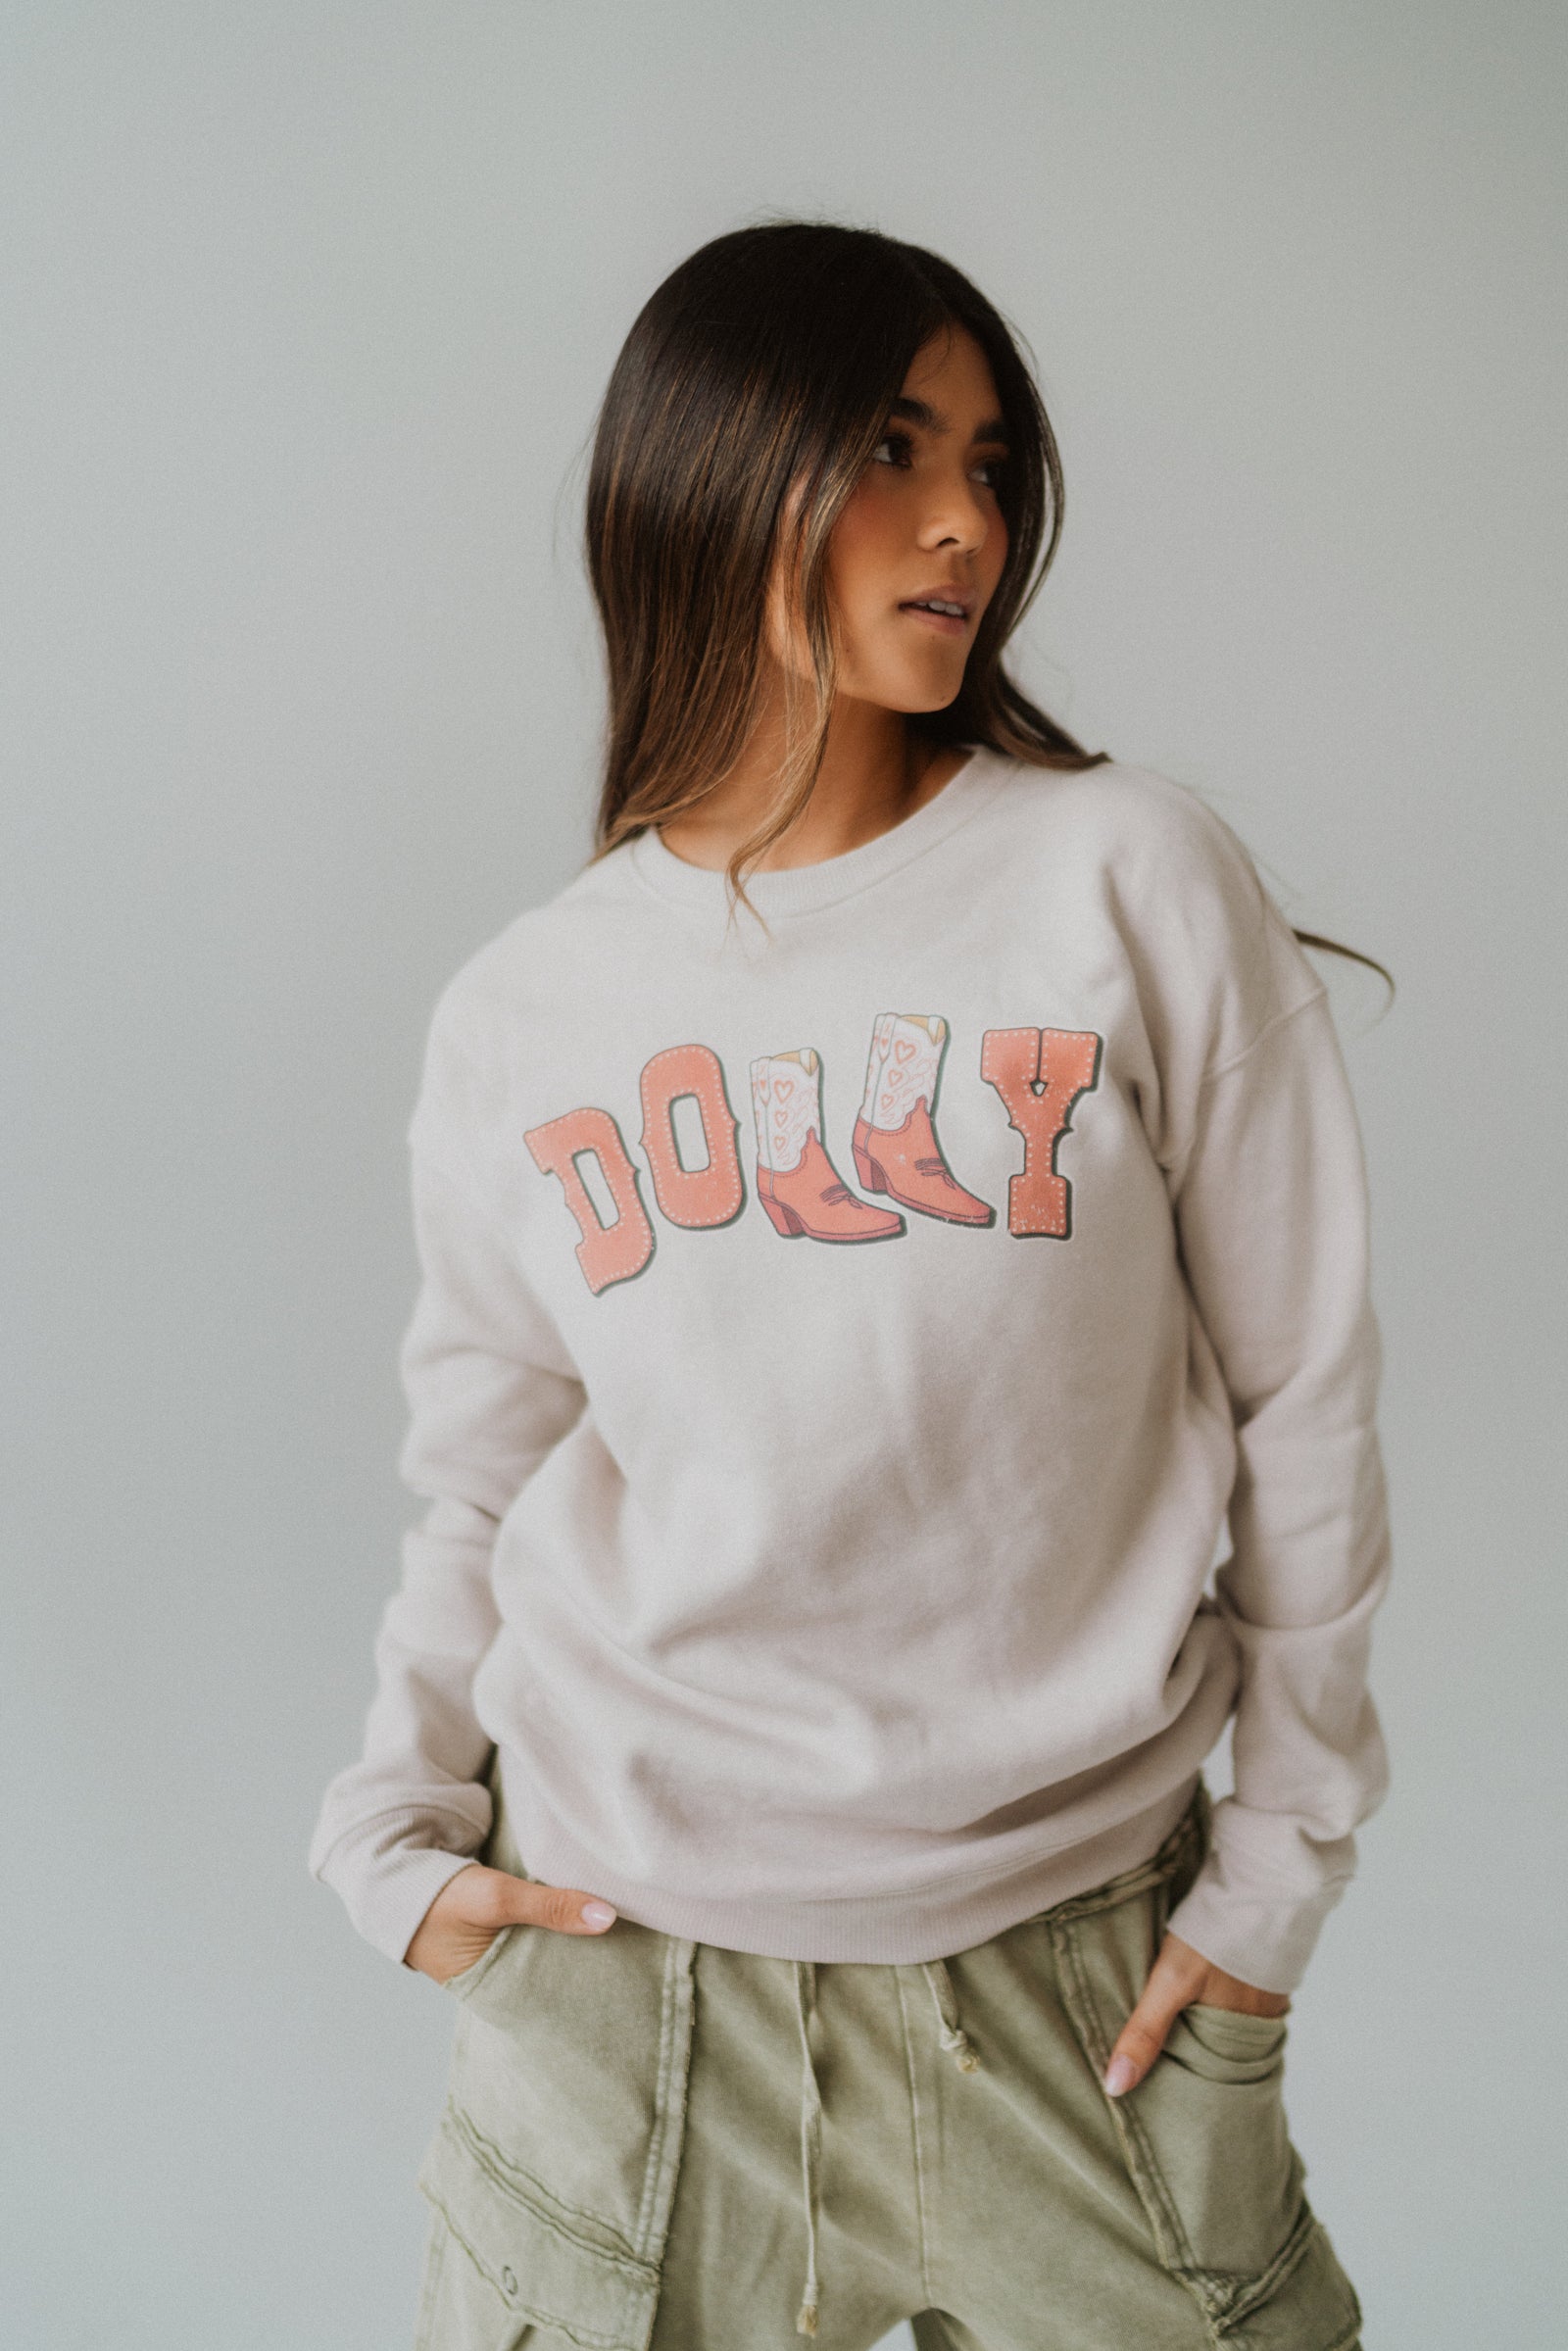 Dolly Boots Sweatshirt